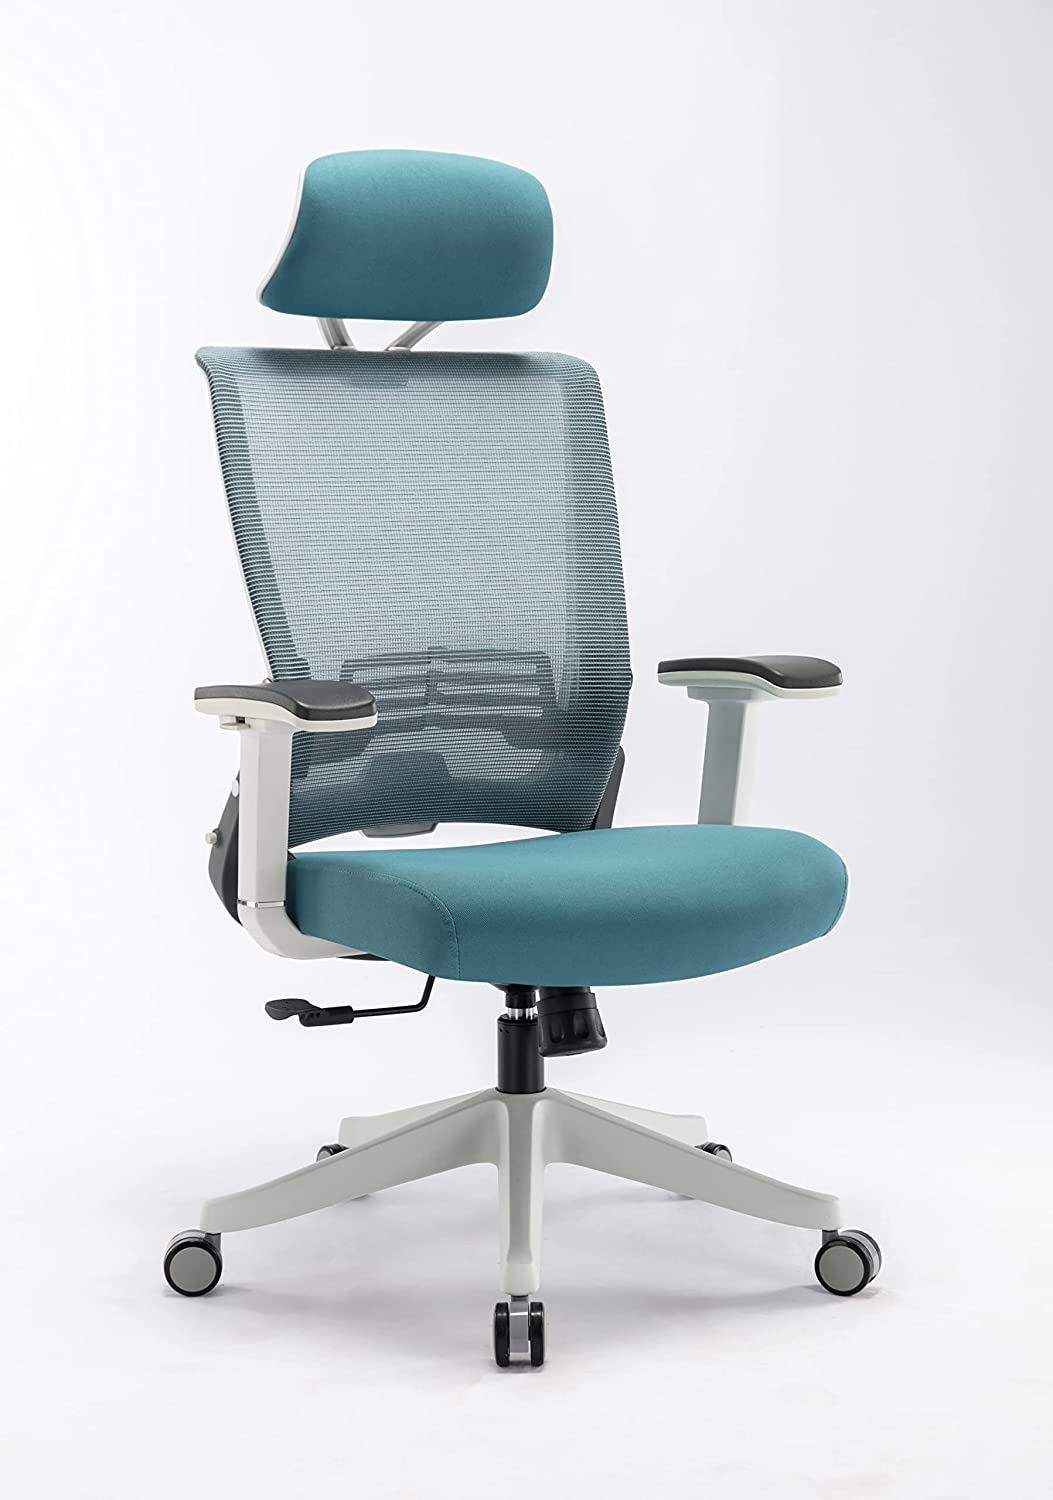 KIKO Chair, Ergonomic Folding Design, Premium Office & Computer Chair by Navodesk (MARINE BLUE)